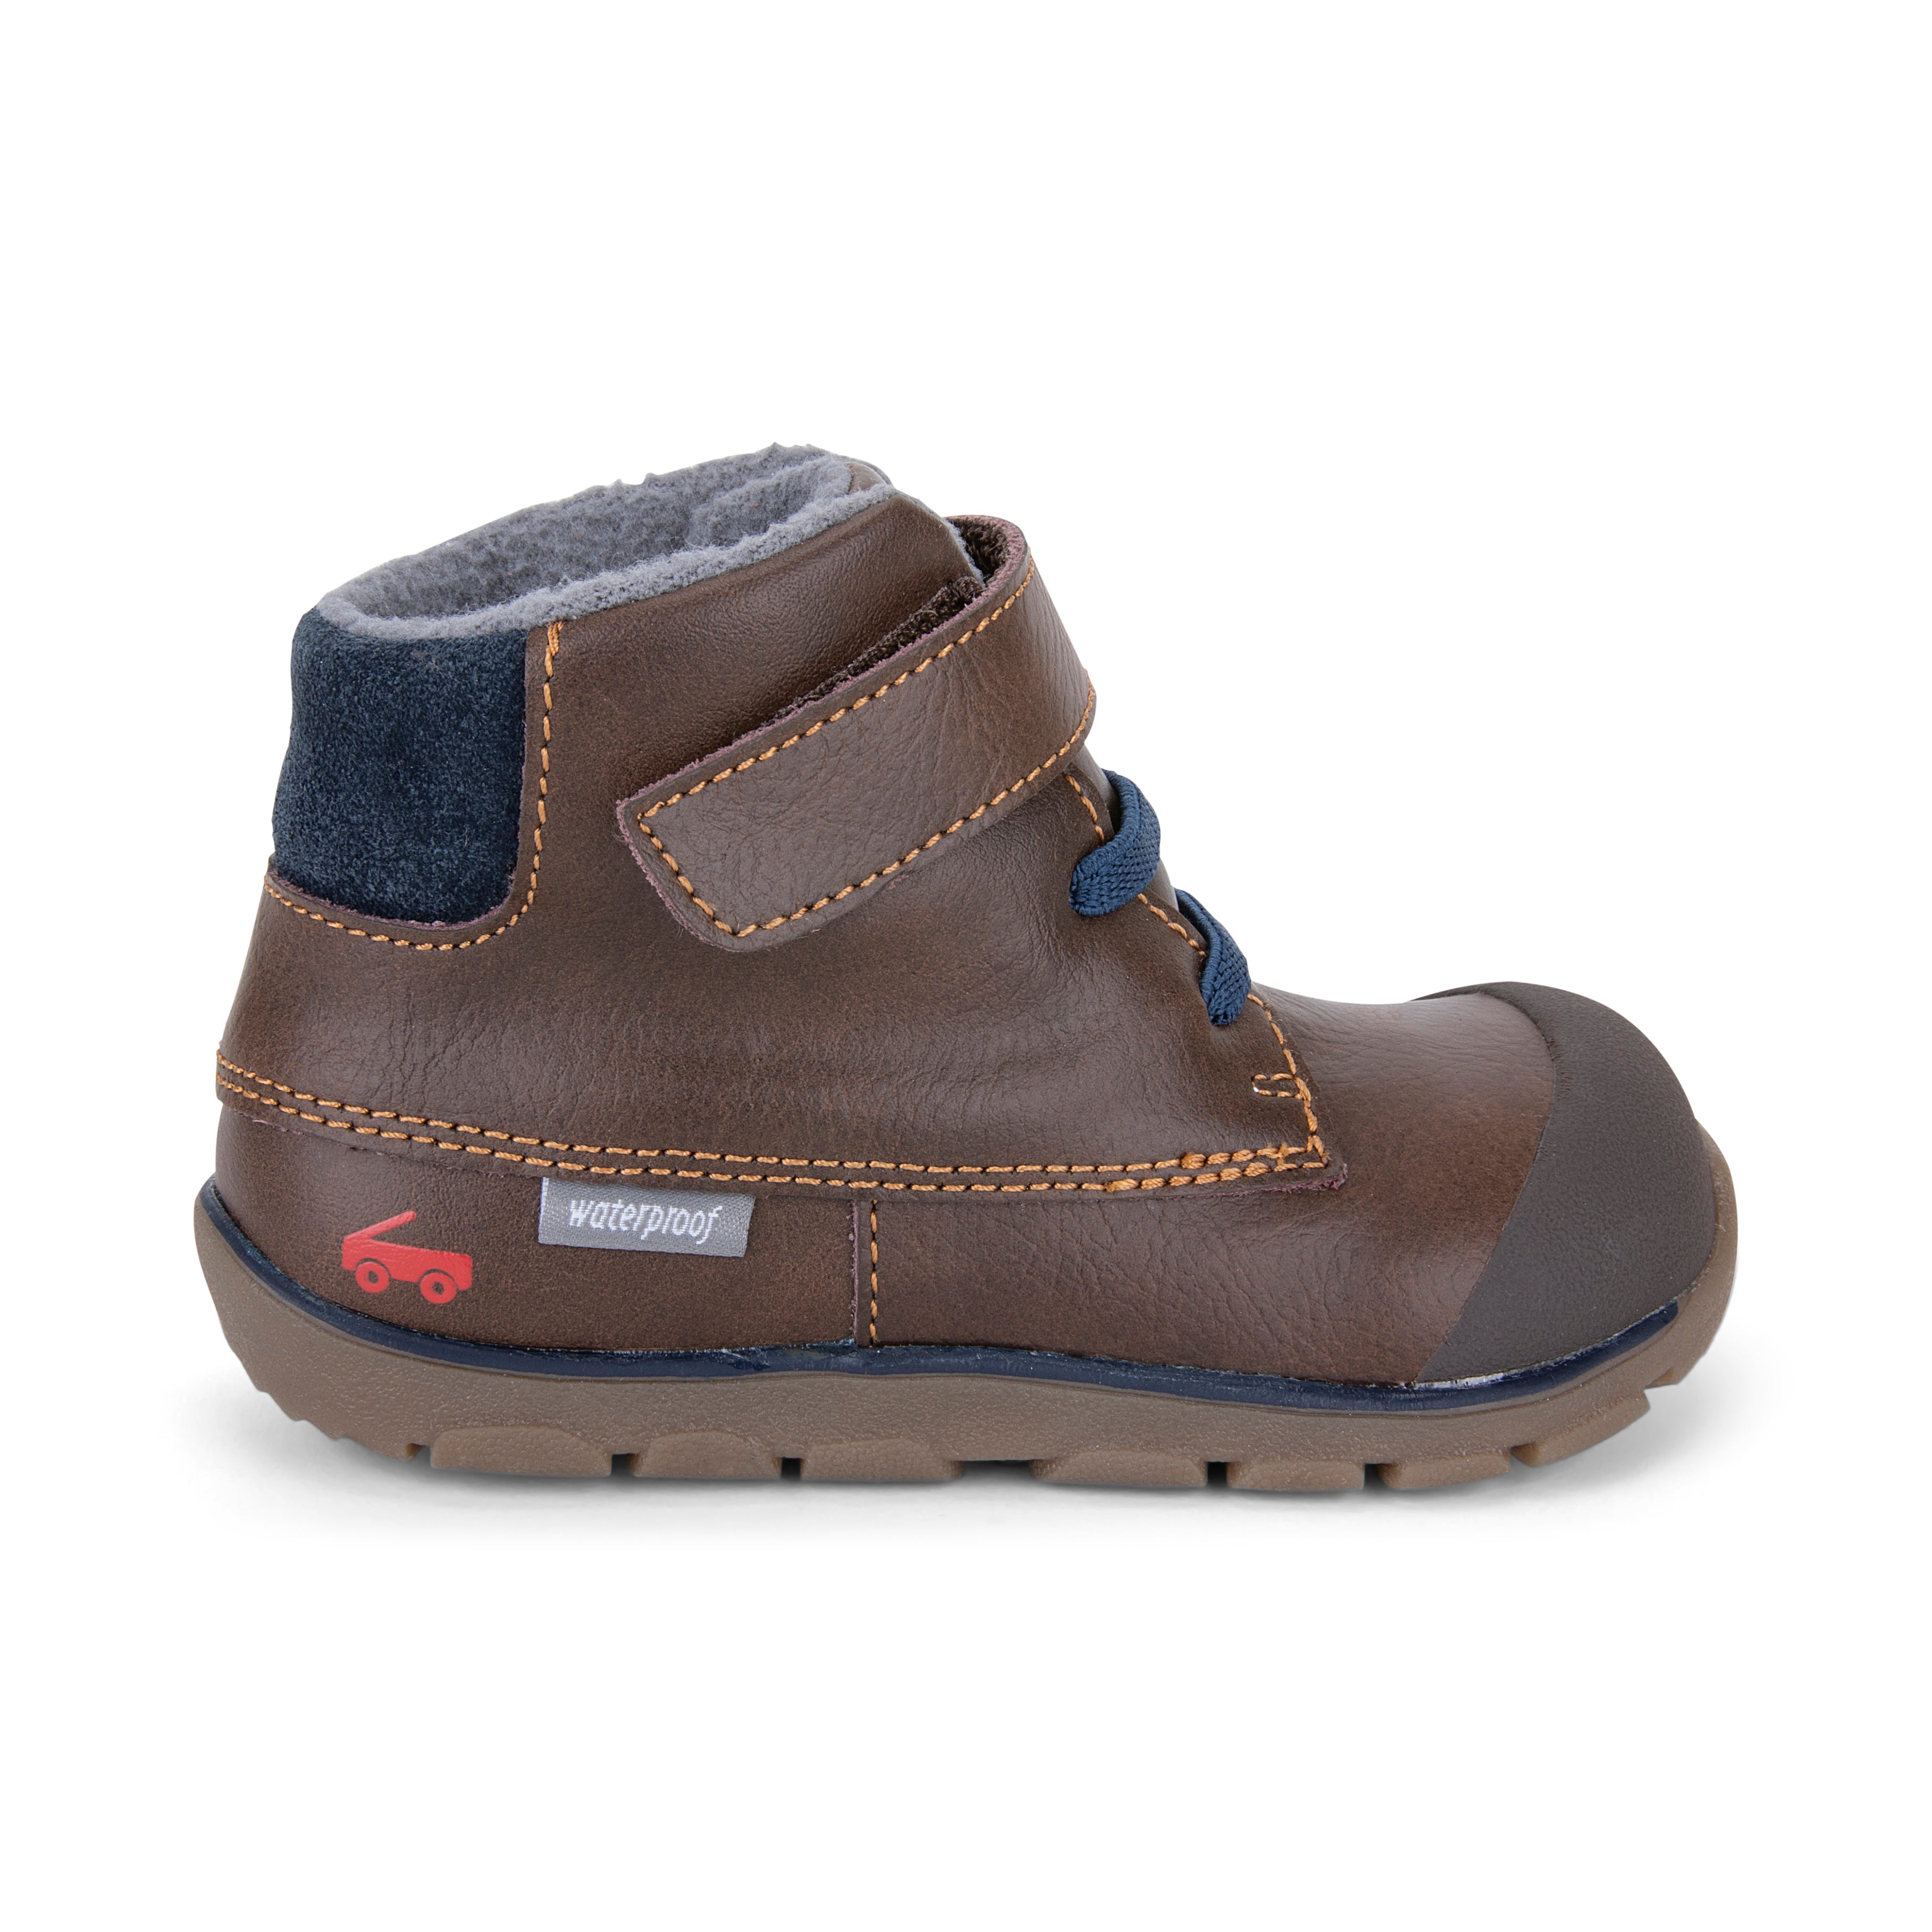 Lennon Waterproof boot - Brown Leather